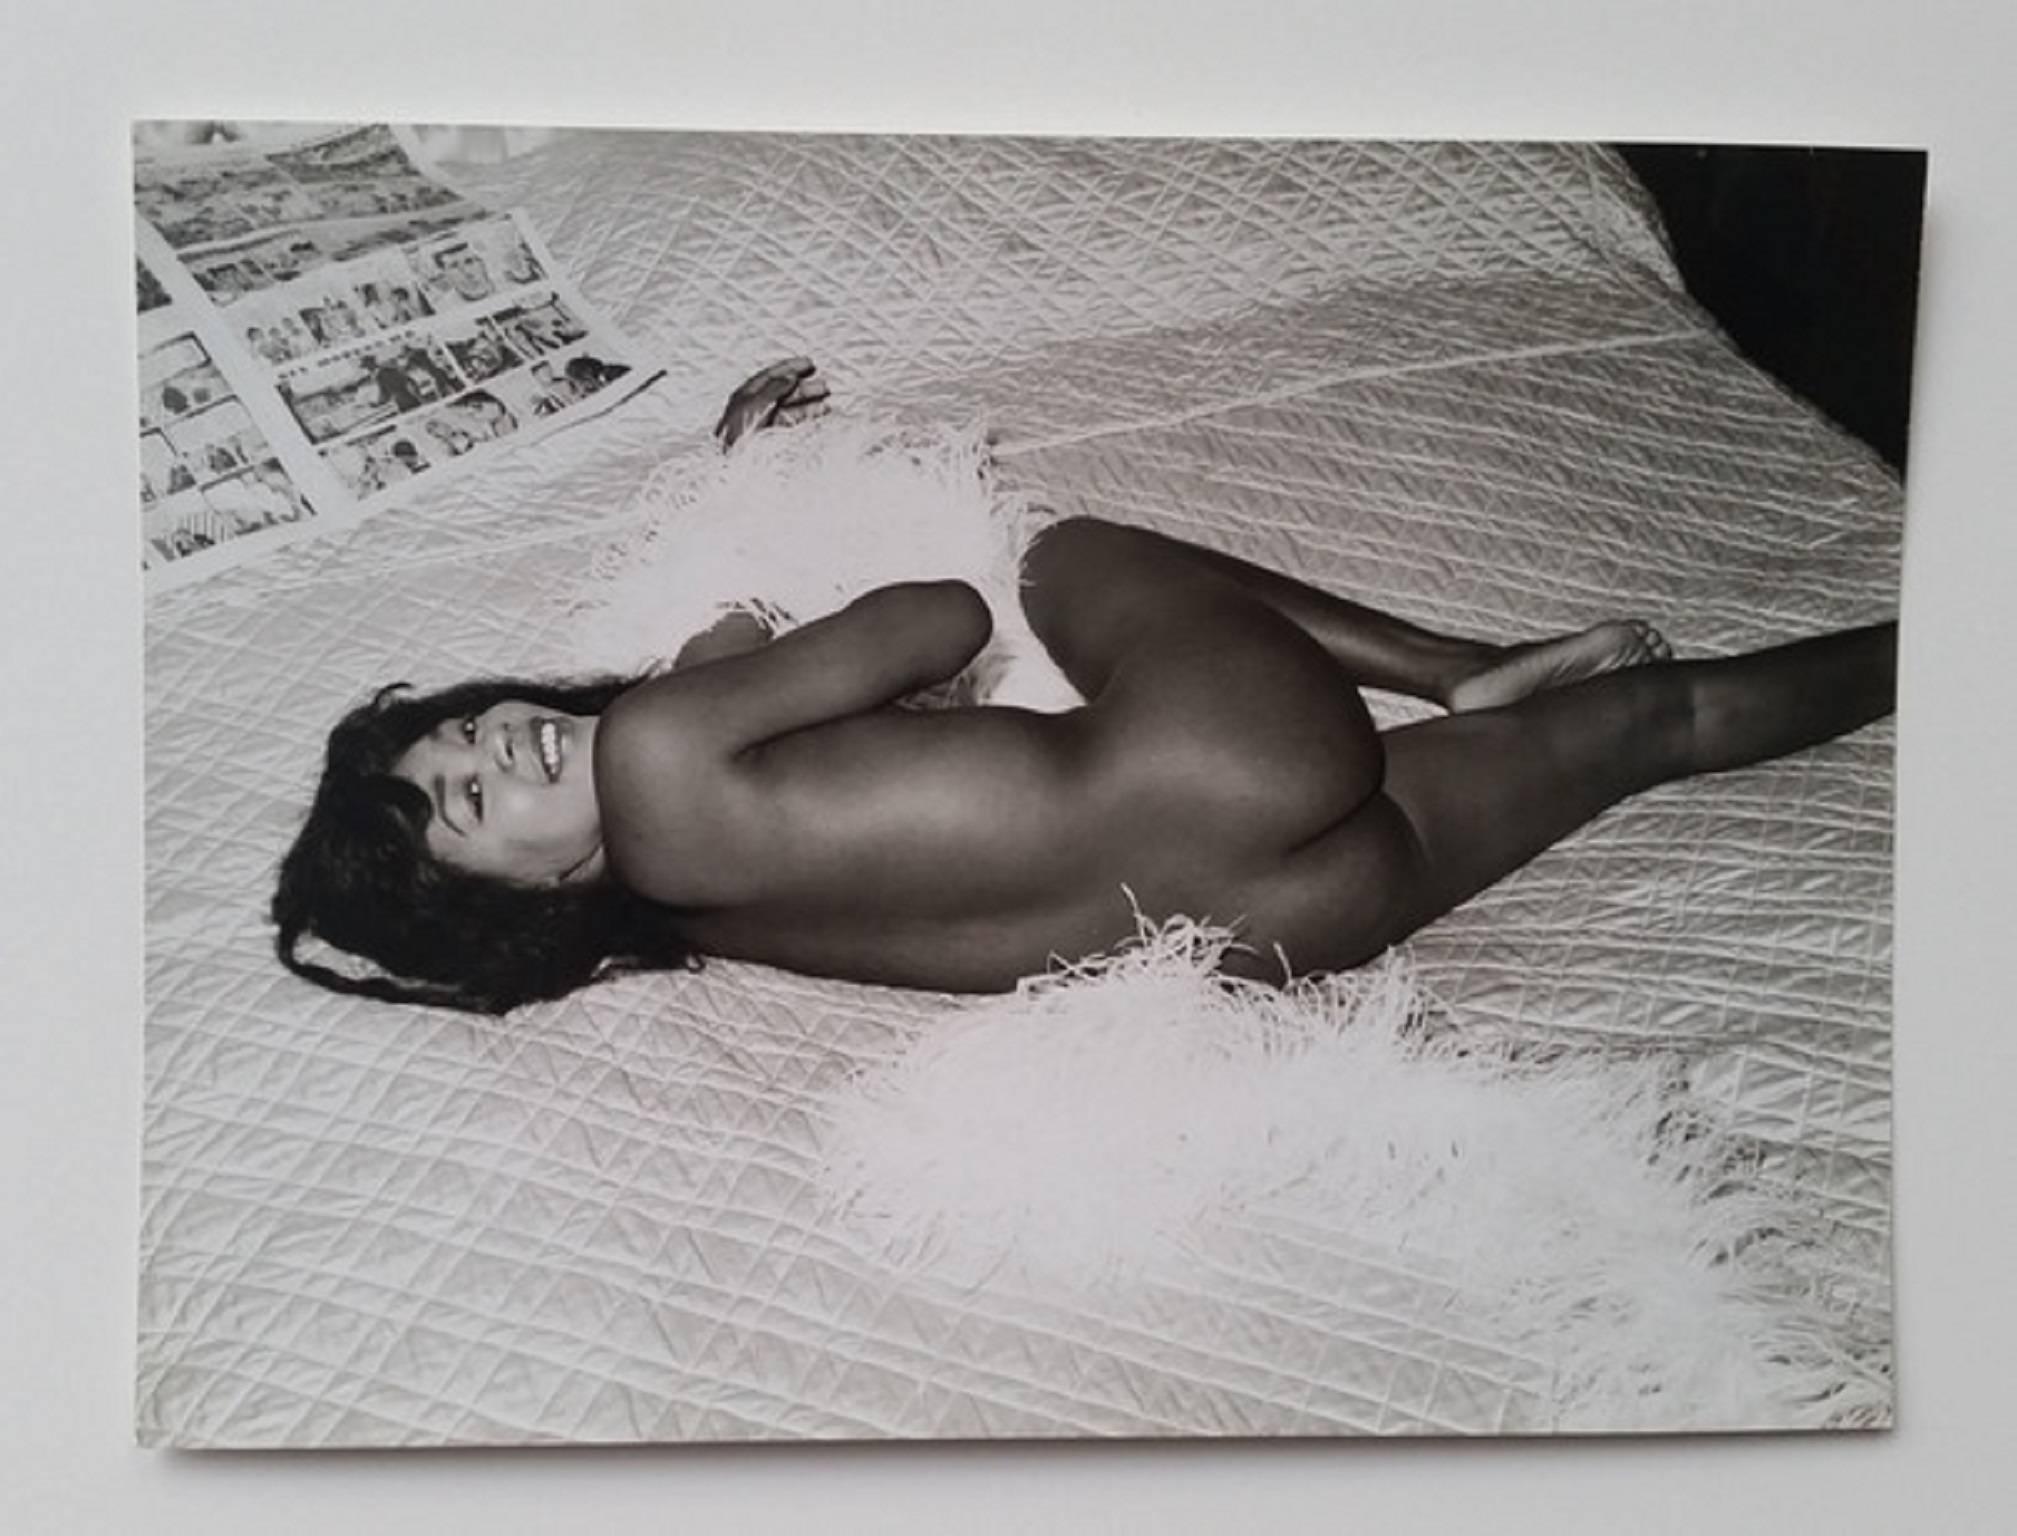 Nude Wild Child - Photograph by Andre de Dienes